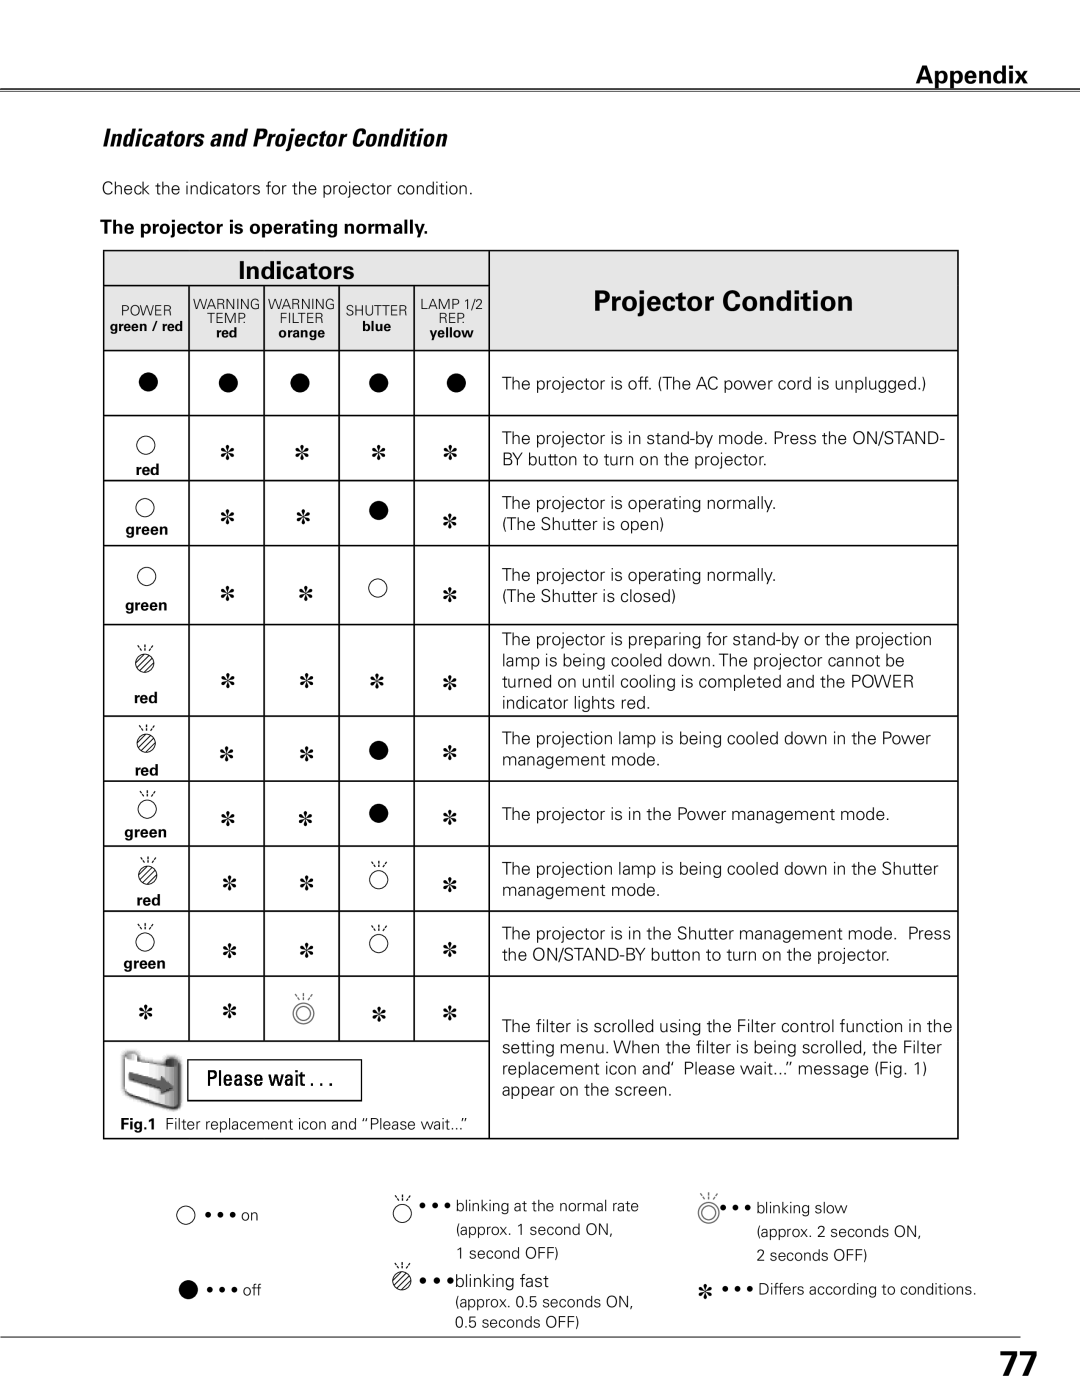 Sanyo WTC500L owner manual Indicators and Projector Condition, Appendix 